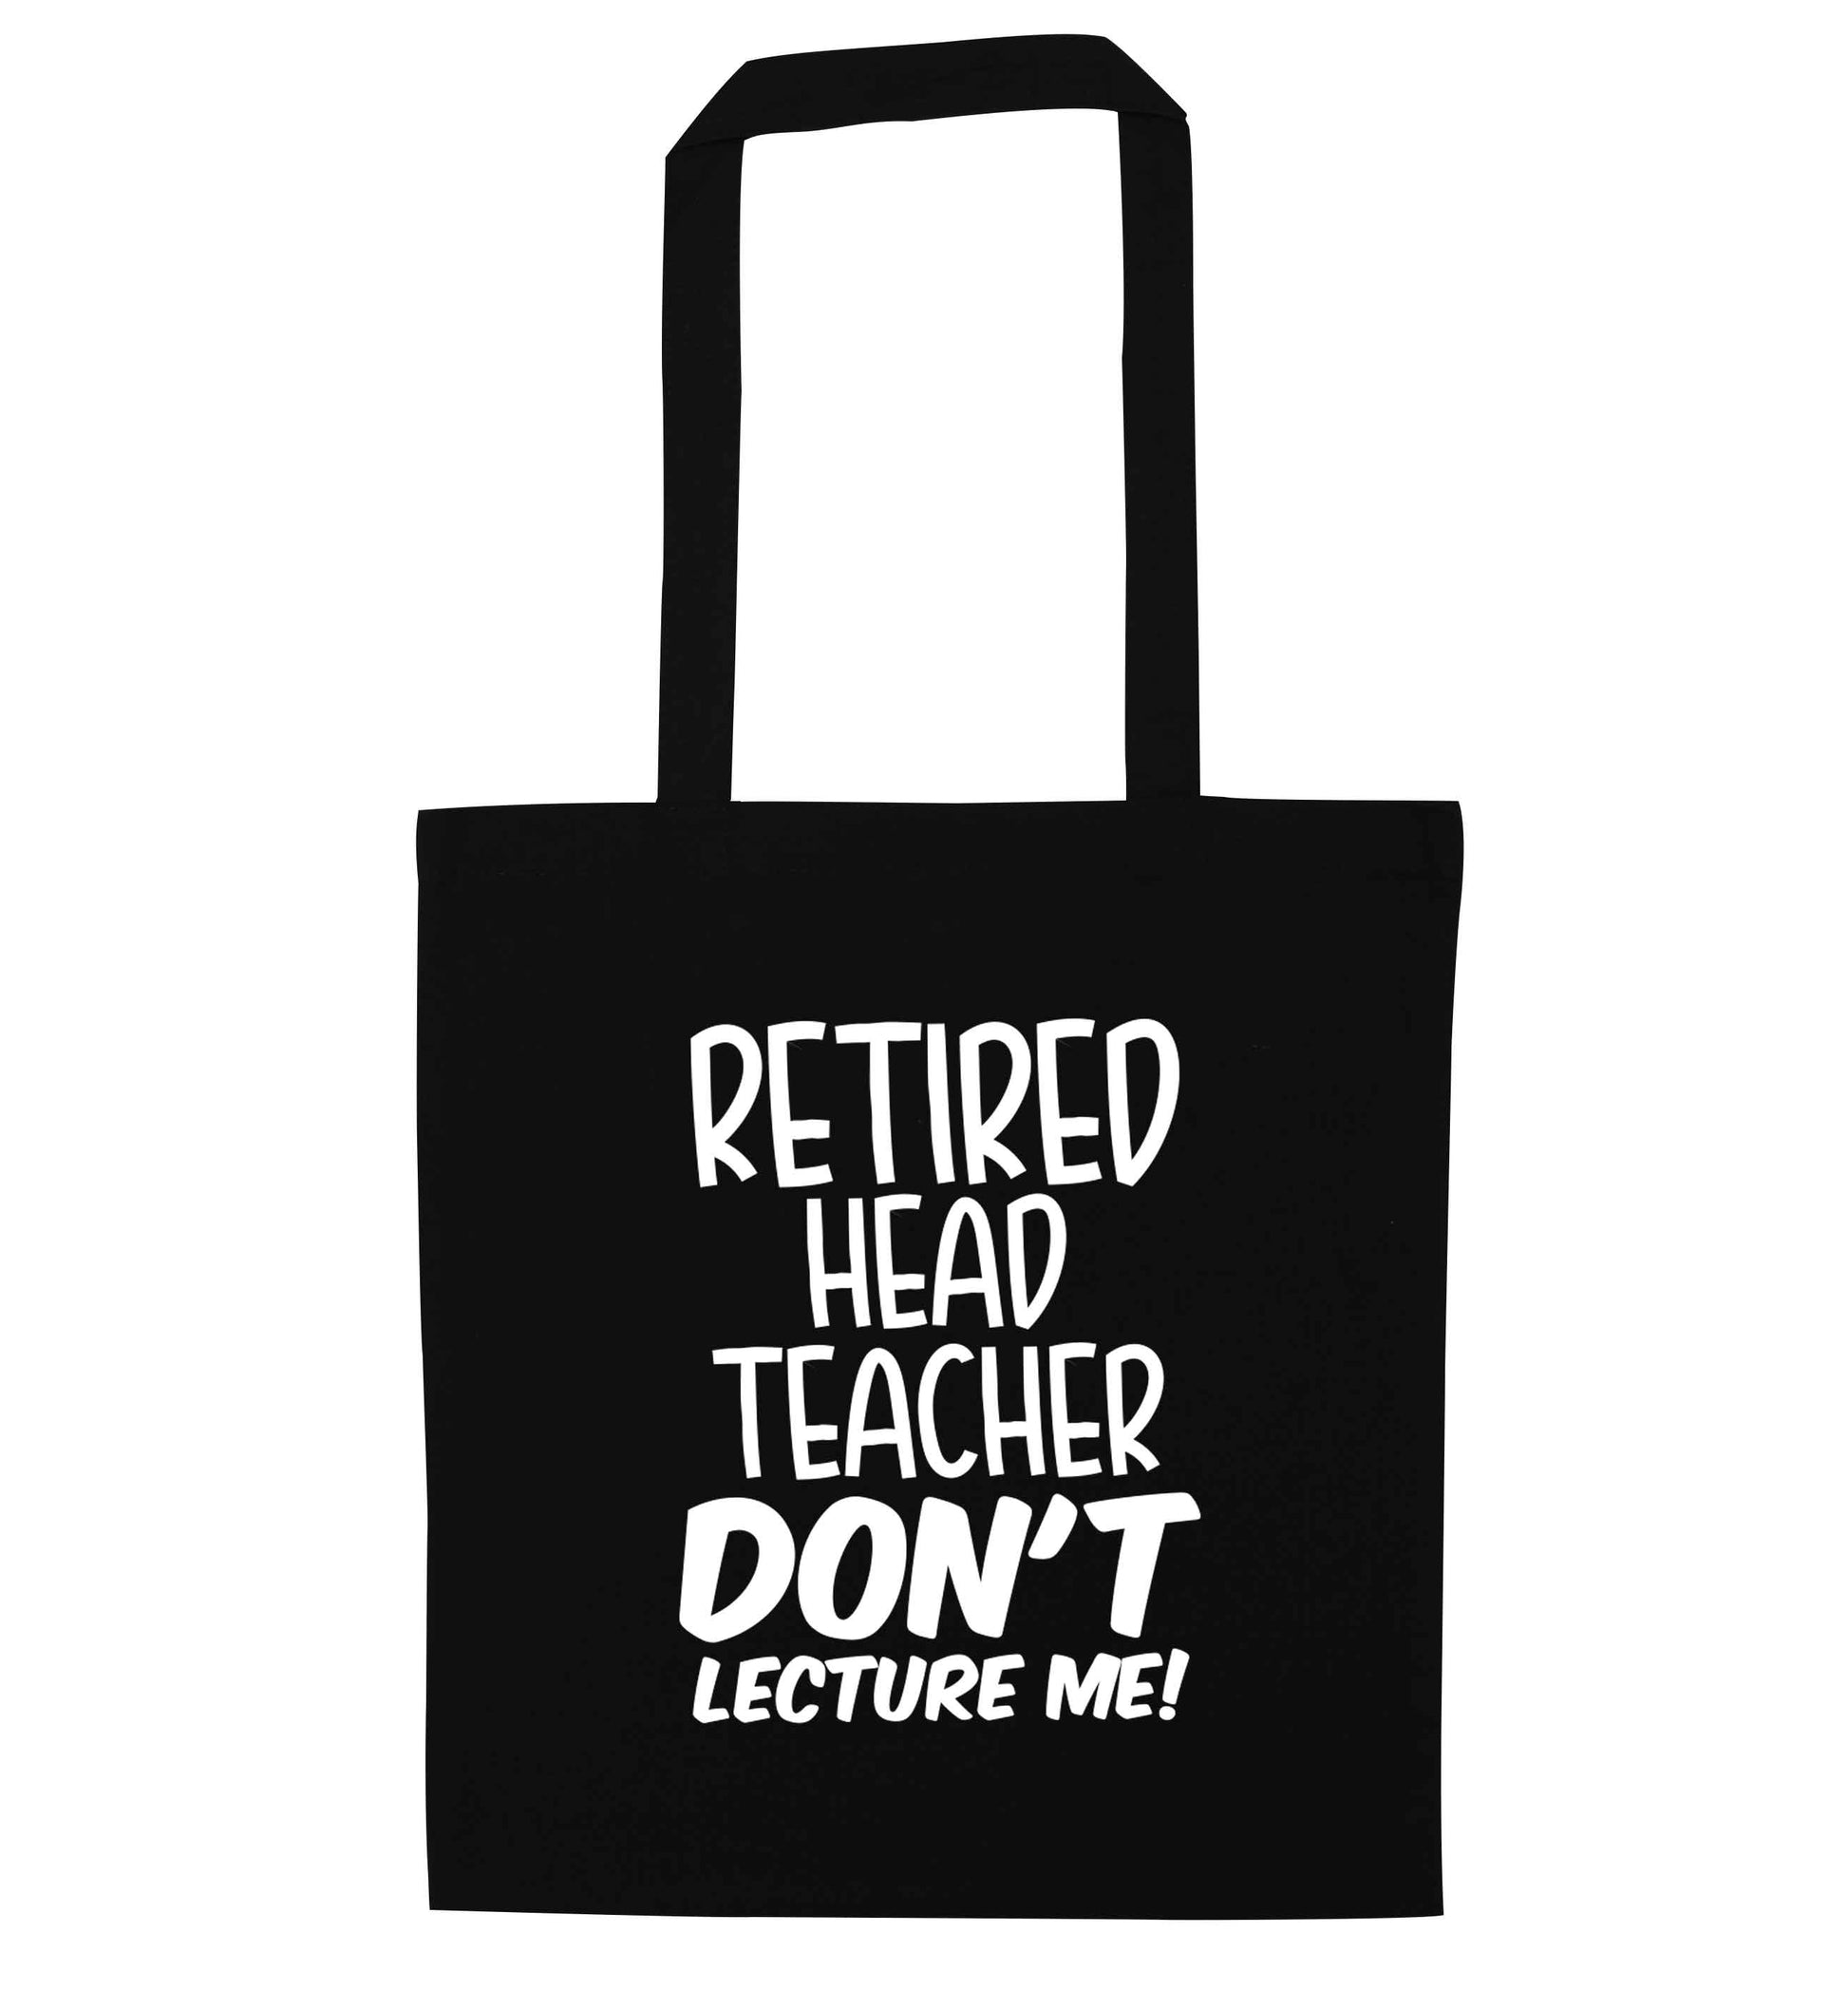 Retired head teacher don't lecture me! black tote bag